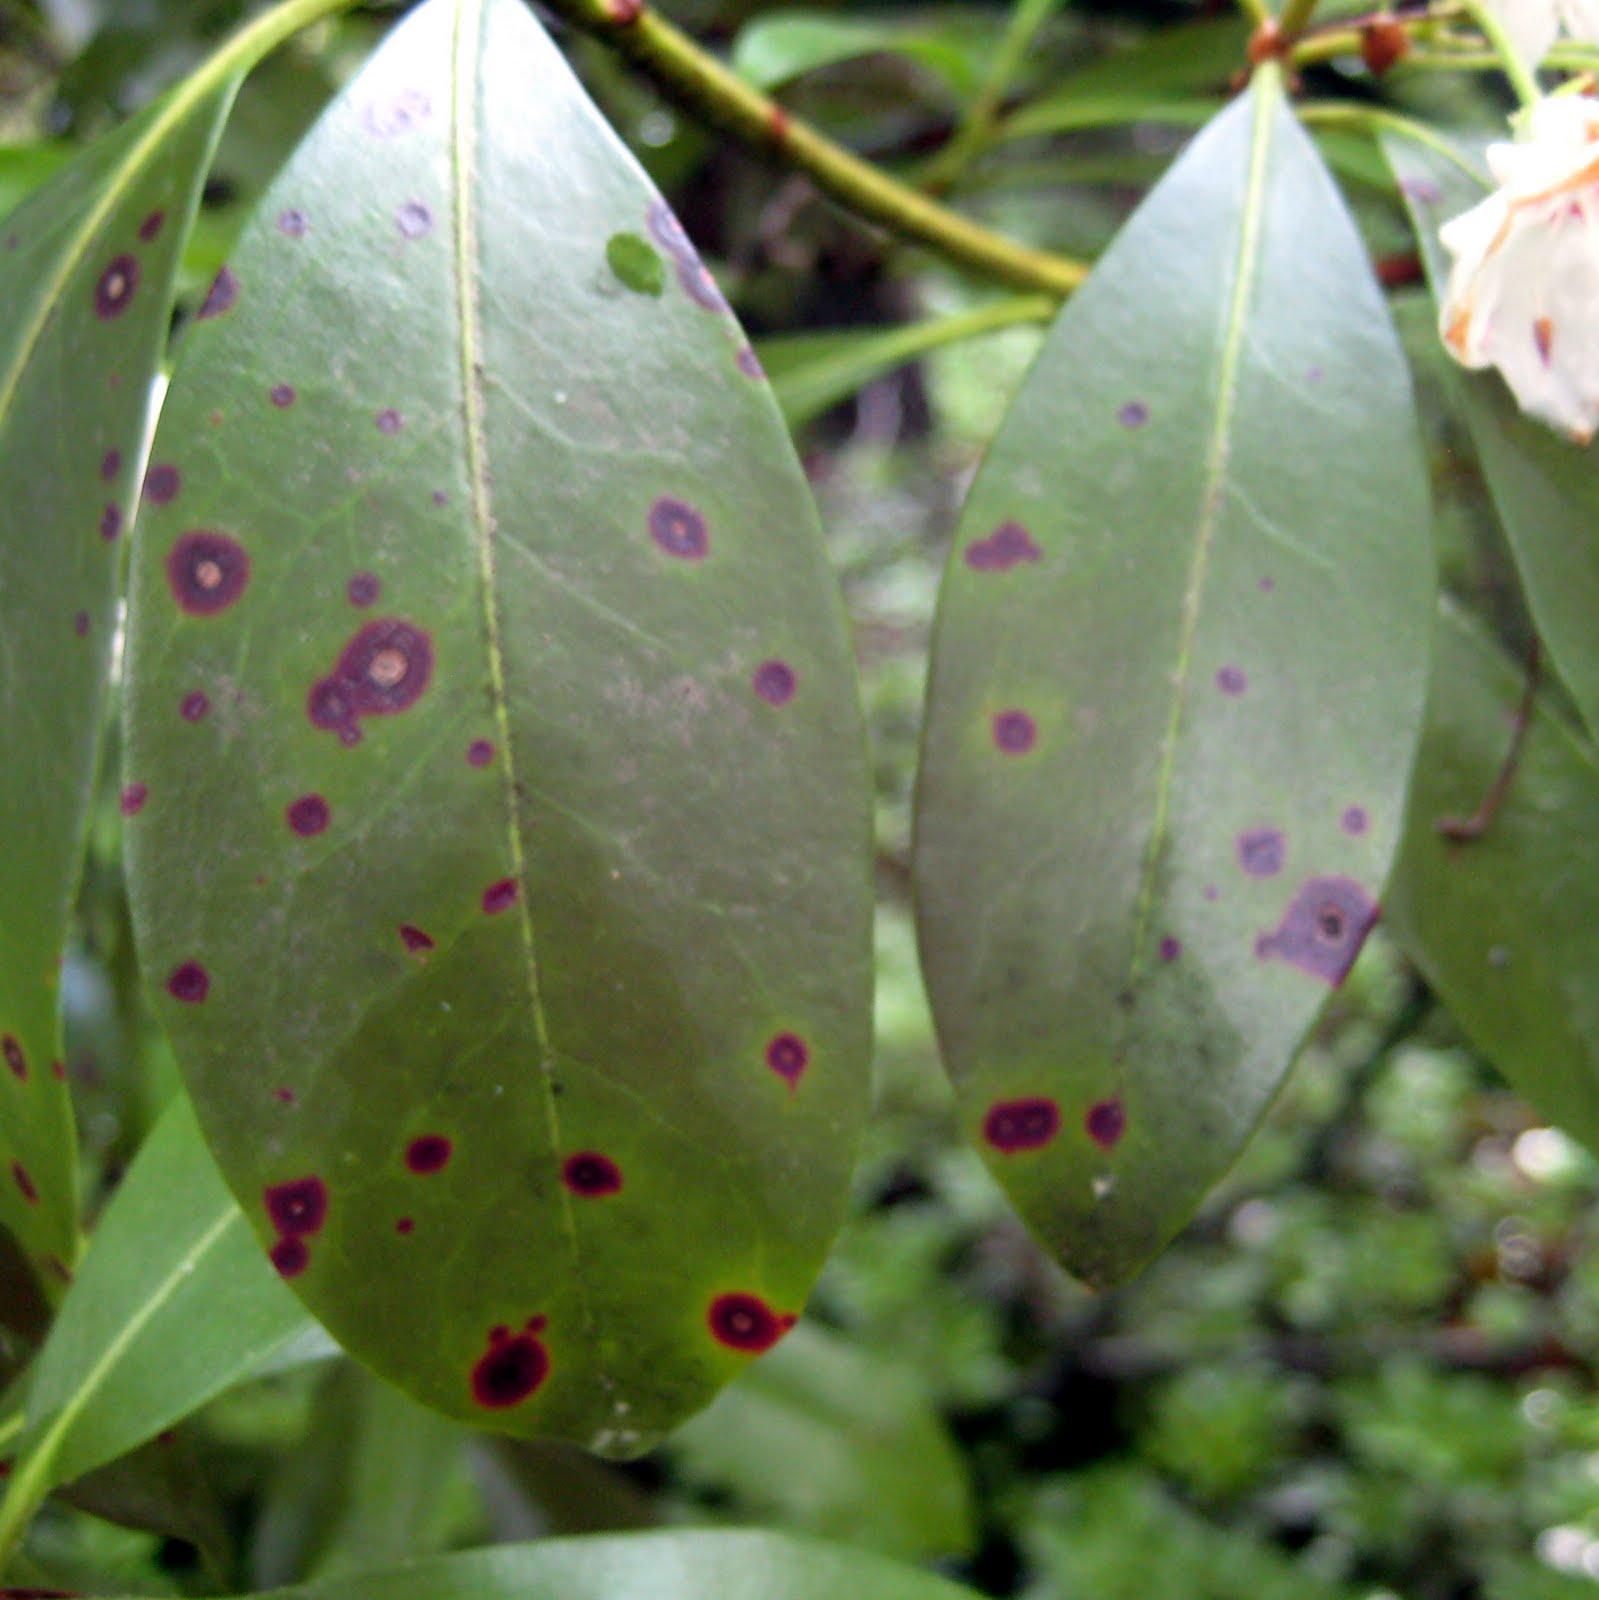 Phyllosticta Leaf Spot